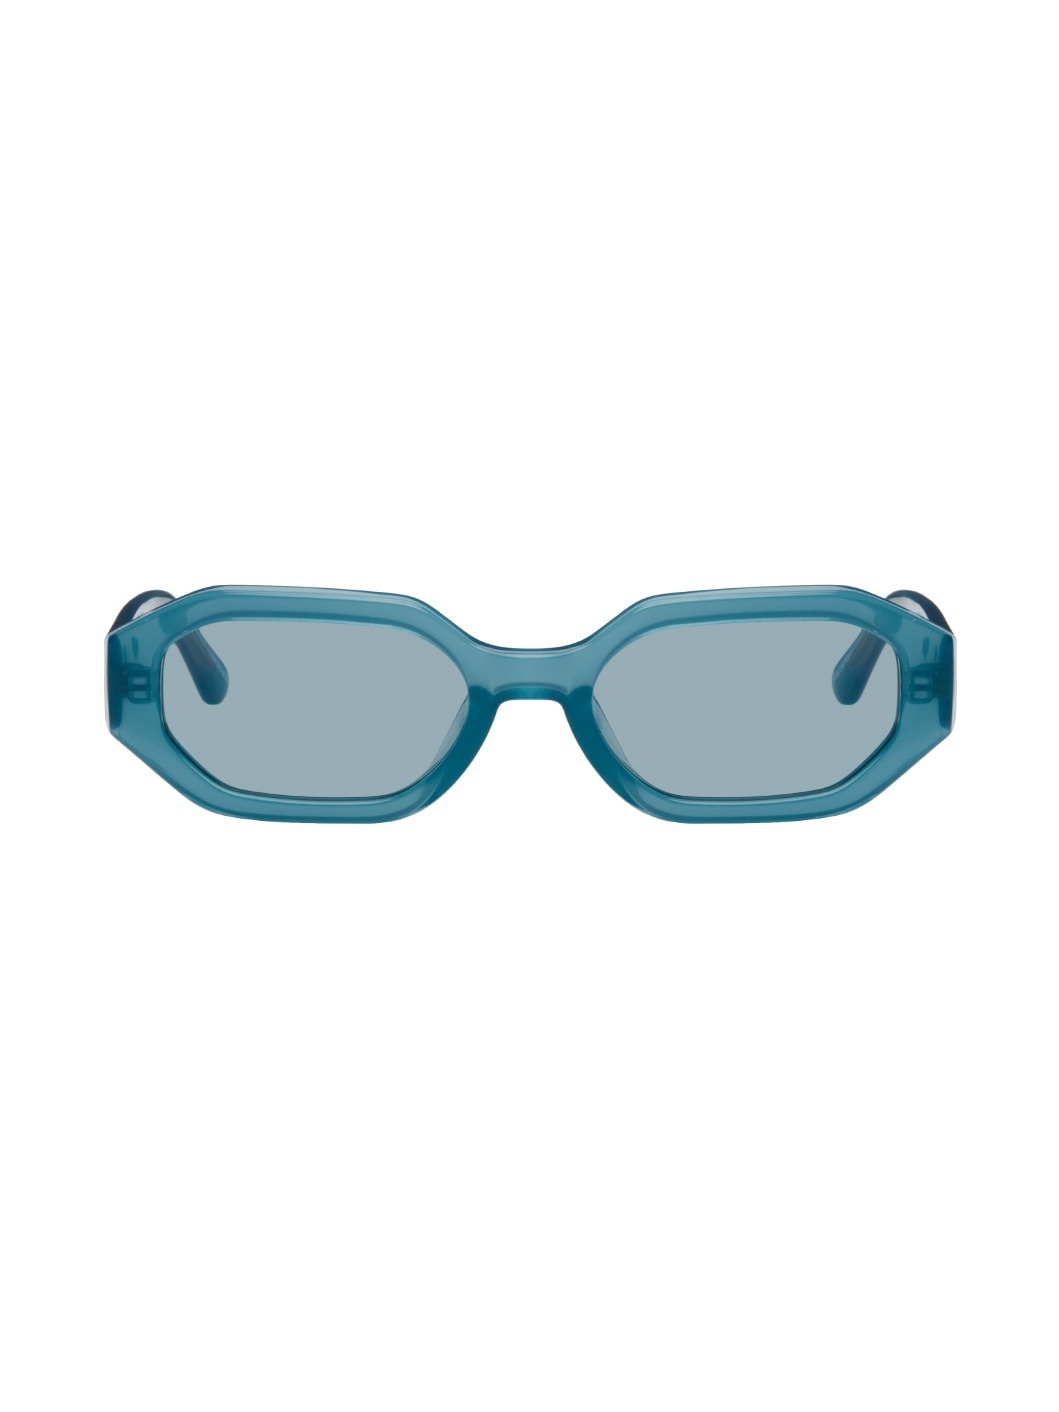 Blue Linda Farrow Edition Irene Sunglasses - 1